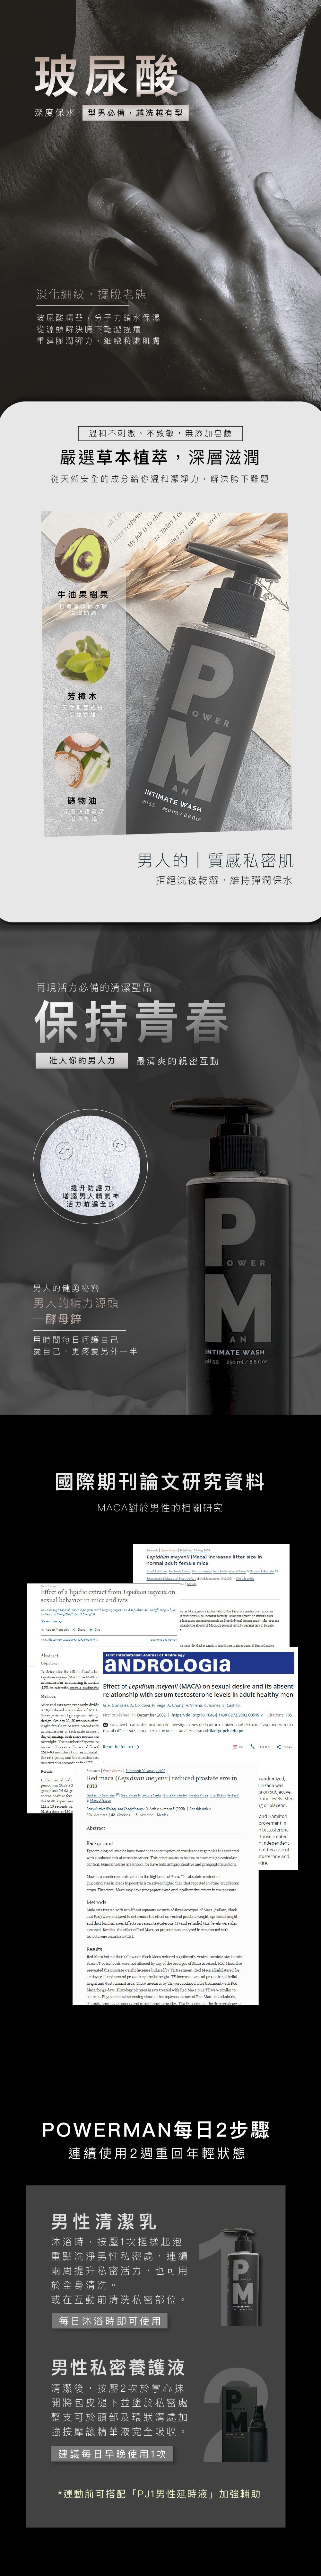 PLAY-JOY-POWERMAN-男性清潔乳-product-details-3